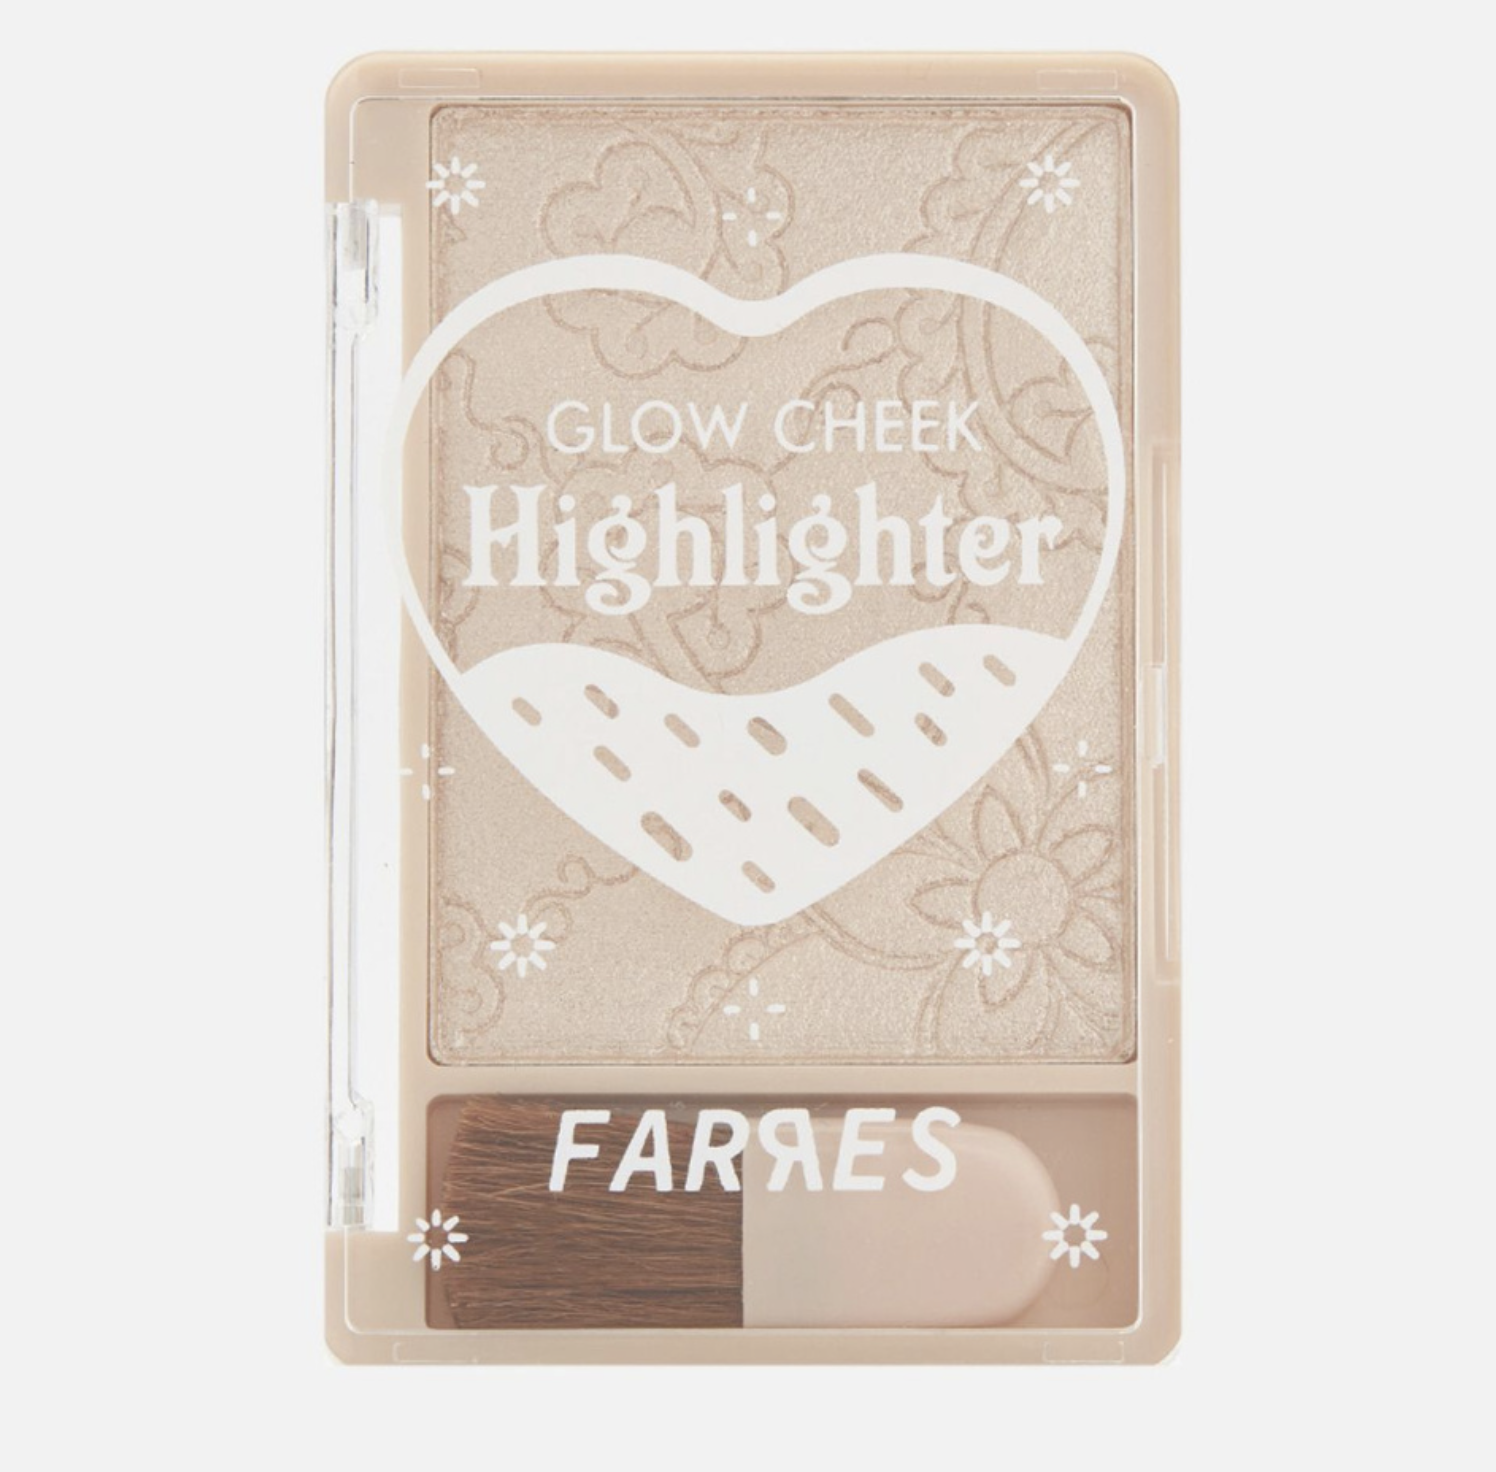 Хайлайтер для лица Farres Glow Cheek Highlighter 3205-02, 9,6 г poeteq хайлайтер кремовый highlighter cream